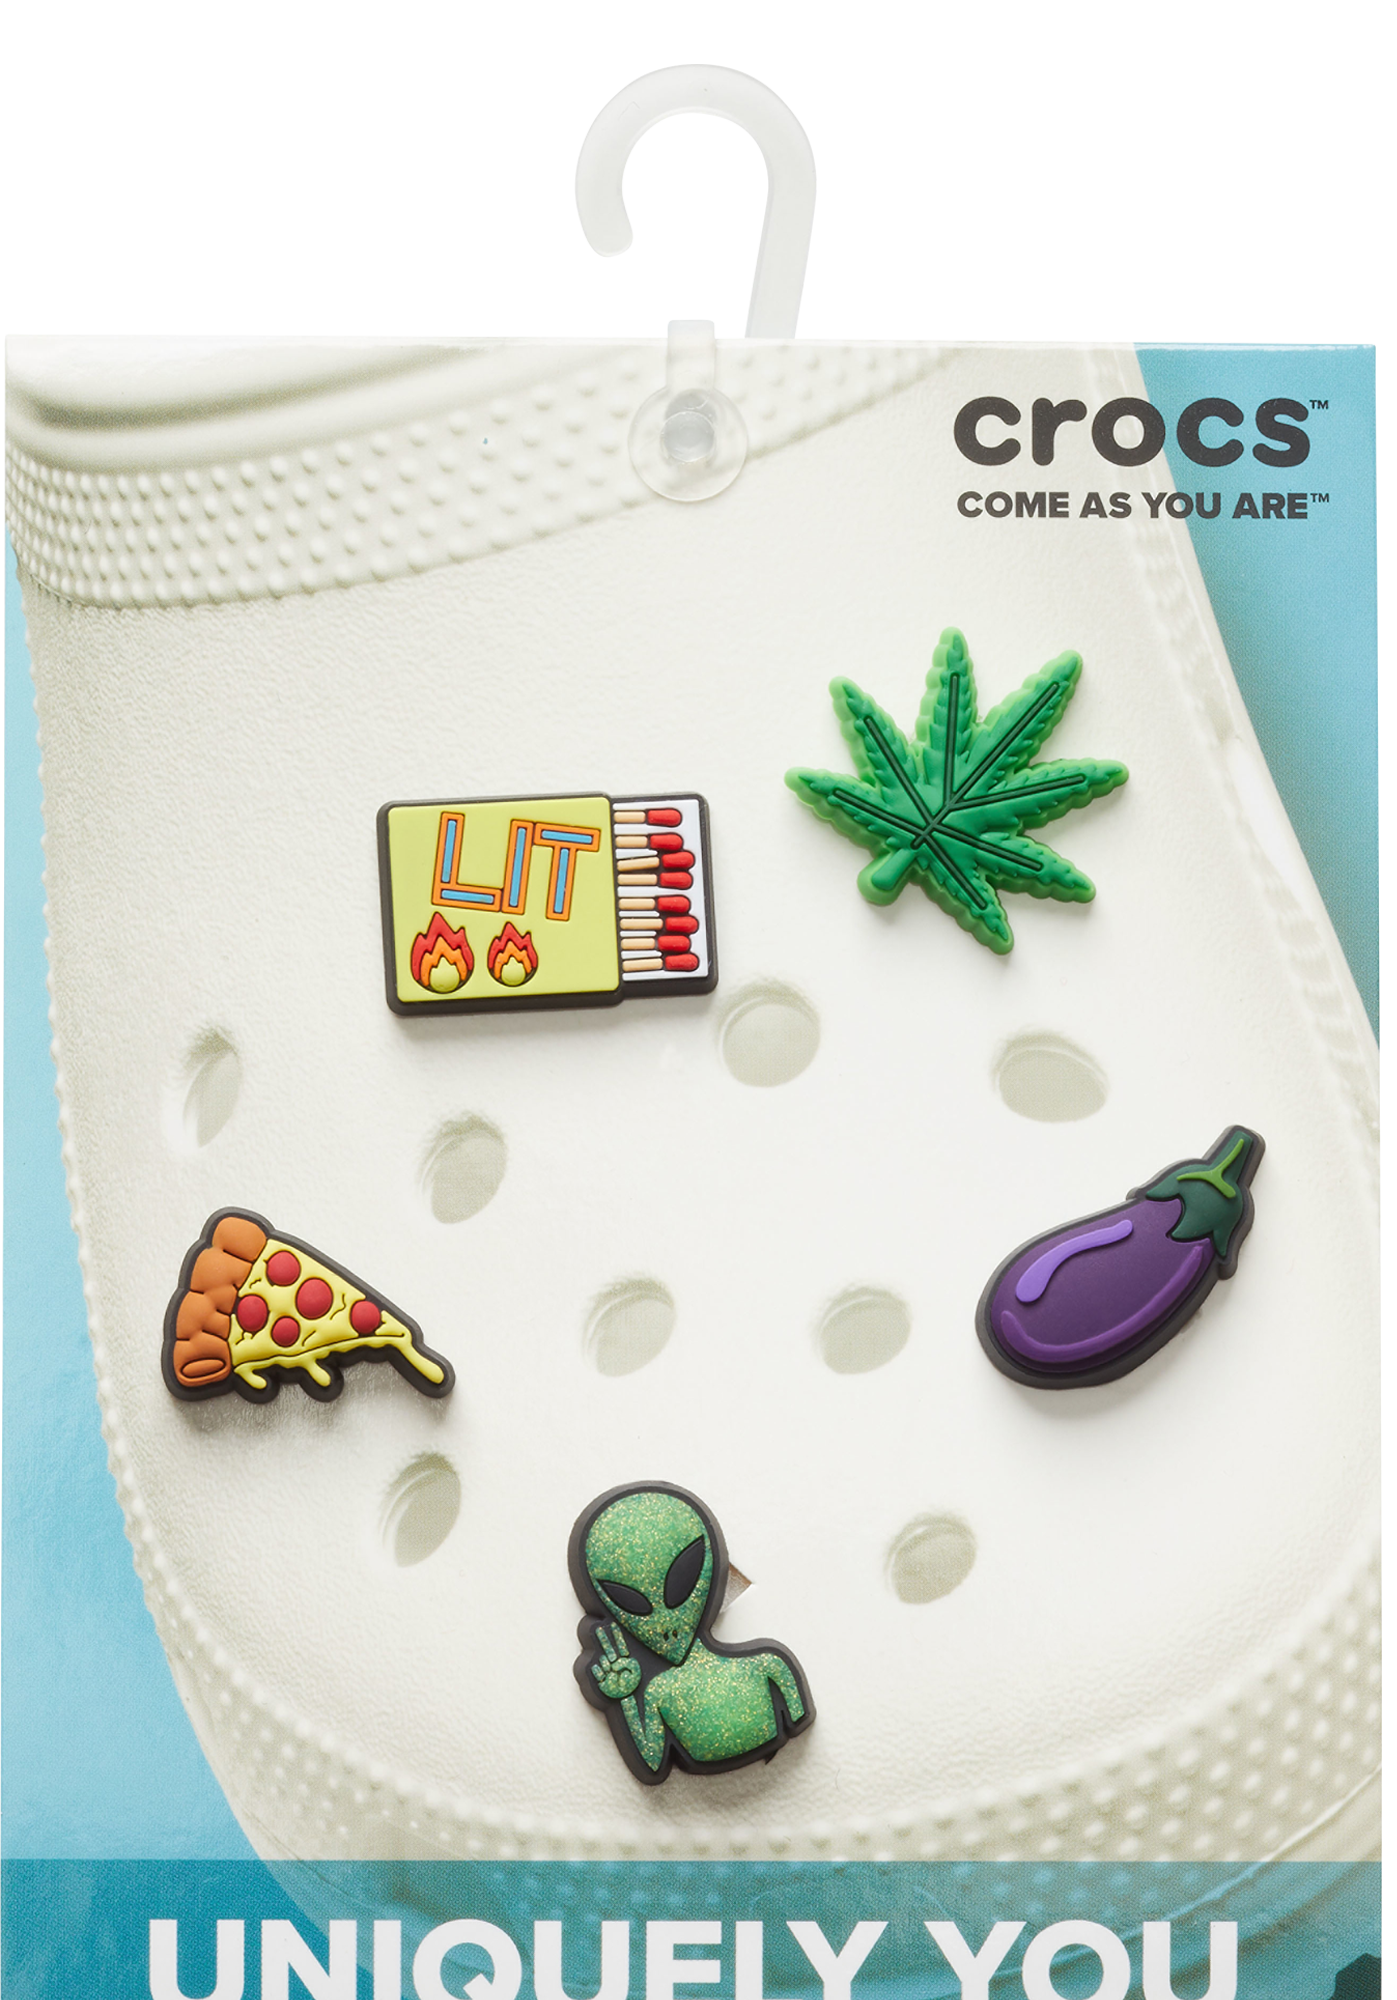 Crocs - Jibbitz™ Charm Pack 4 (Set of 5)